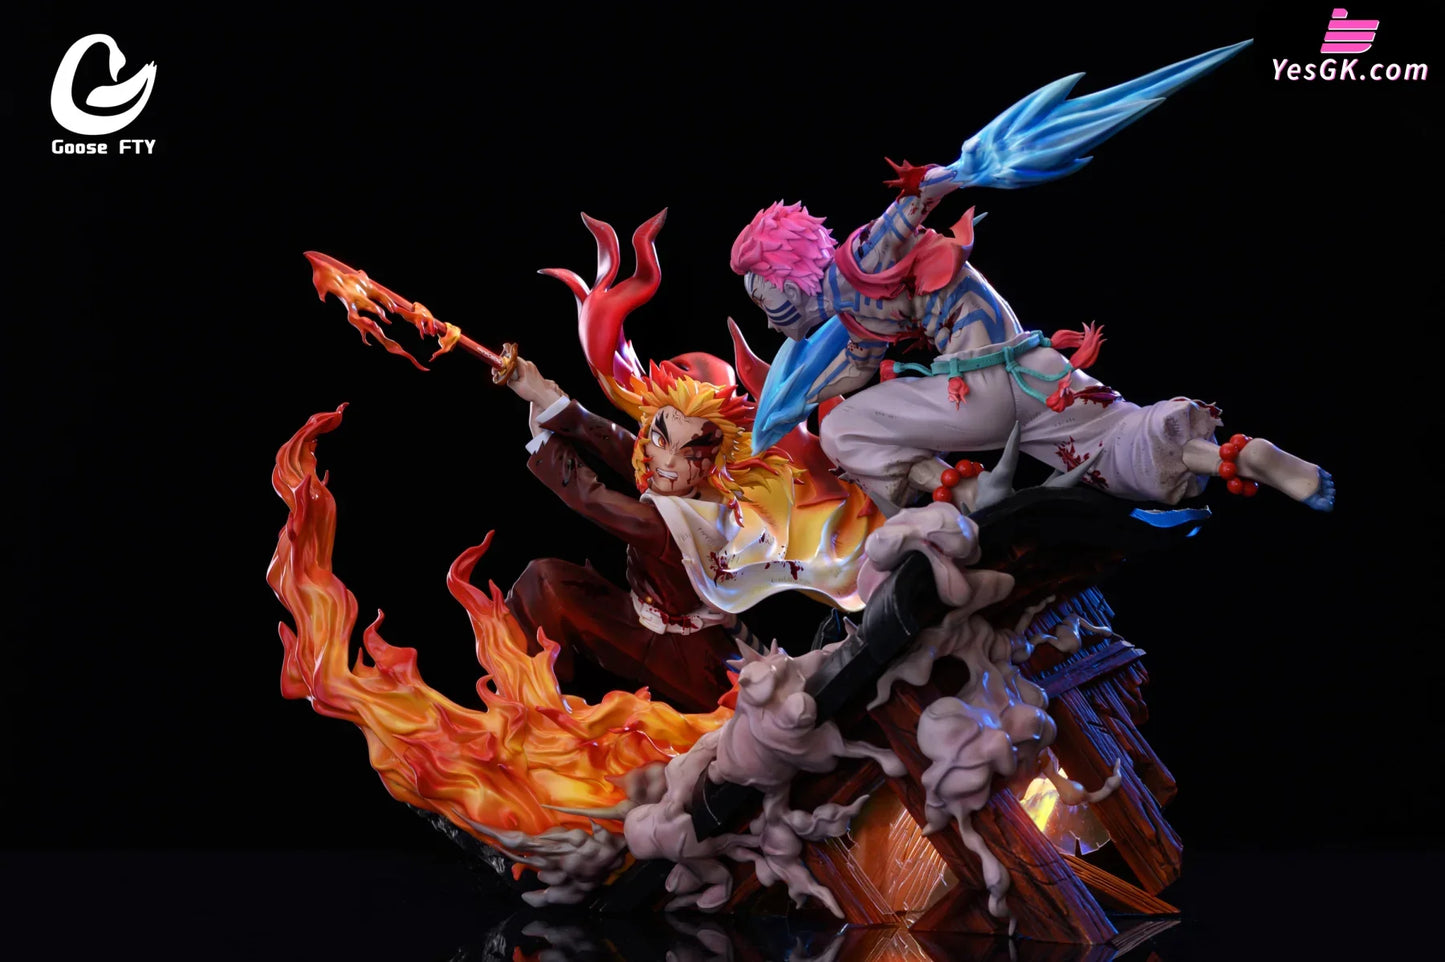 Demon Slayer - Kyojuro Rengoku vs Akaza with LED Resin Statue - Goose FTY [In Stock]